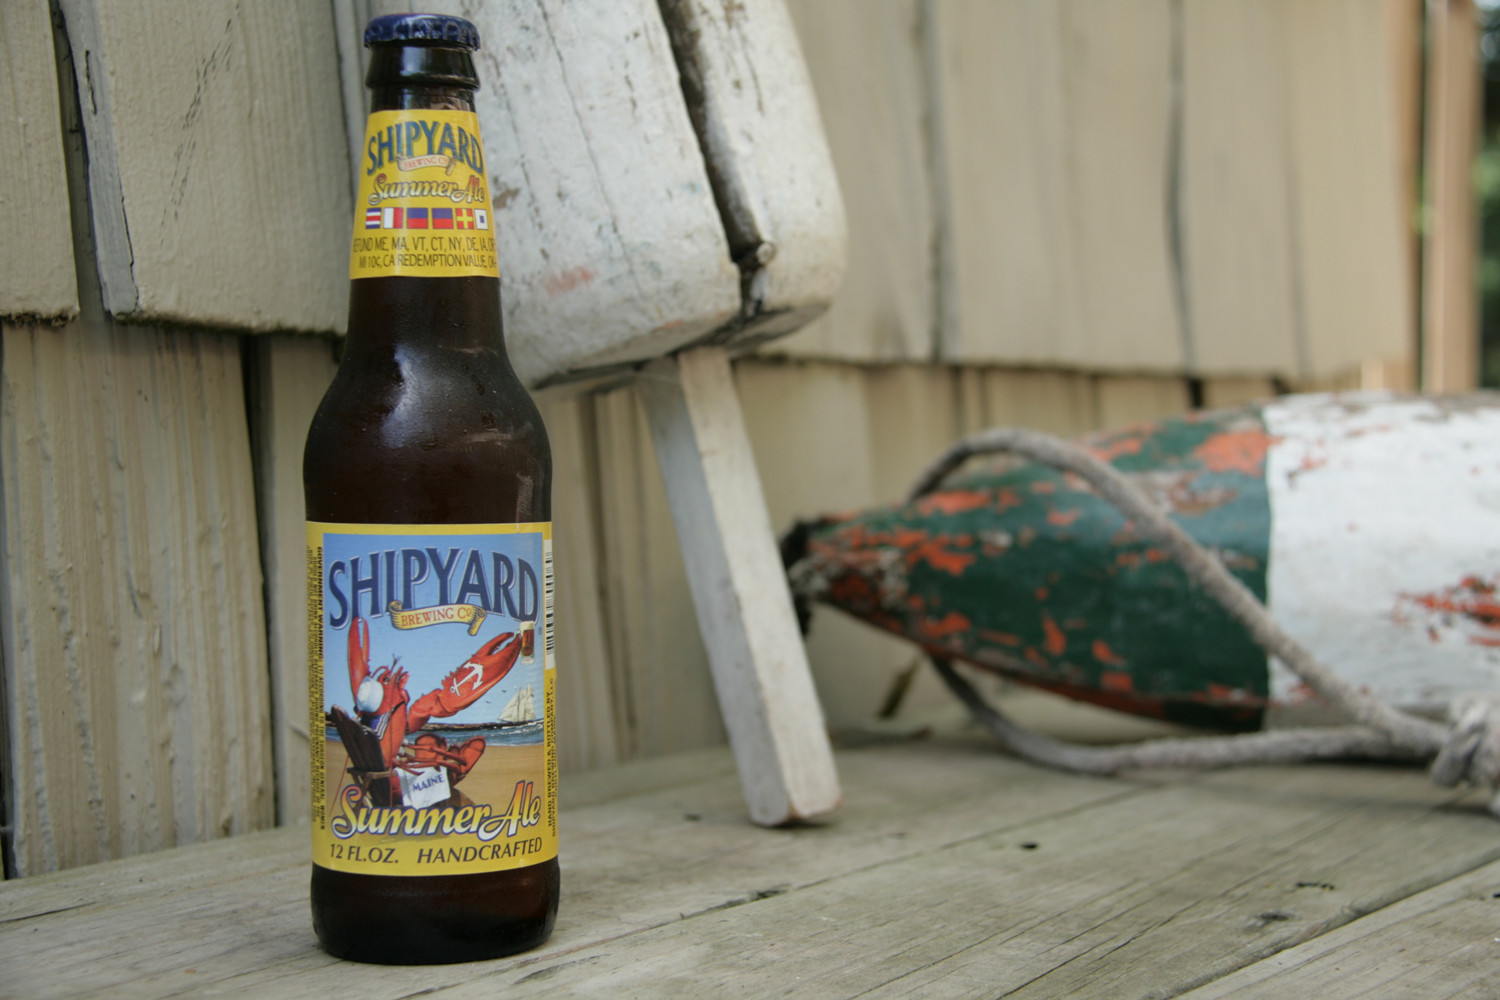 Shipyard Summer Ale is a favorite seasonal summer beer for many.